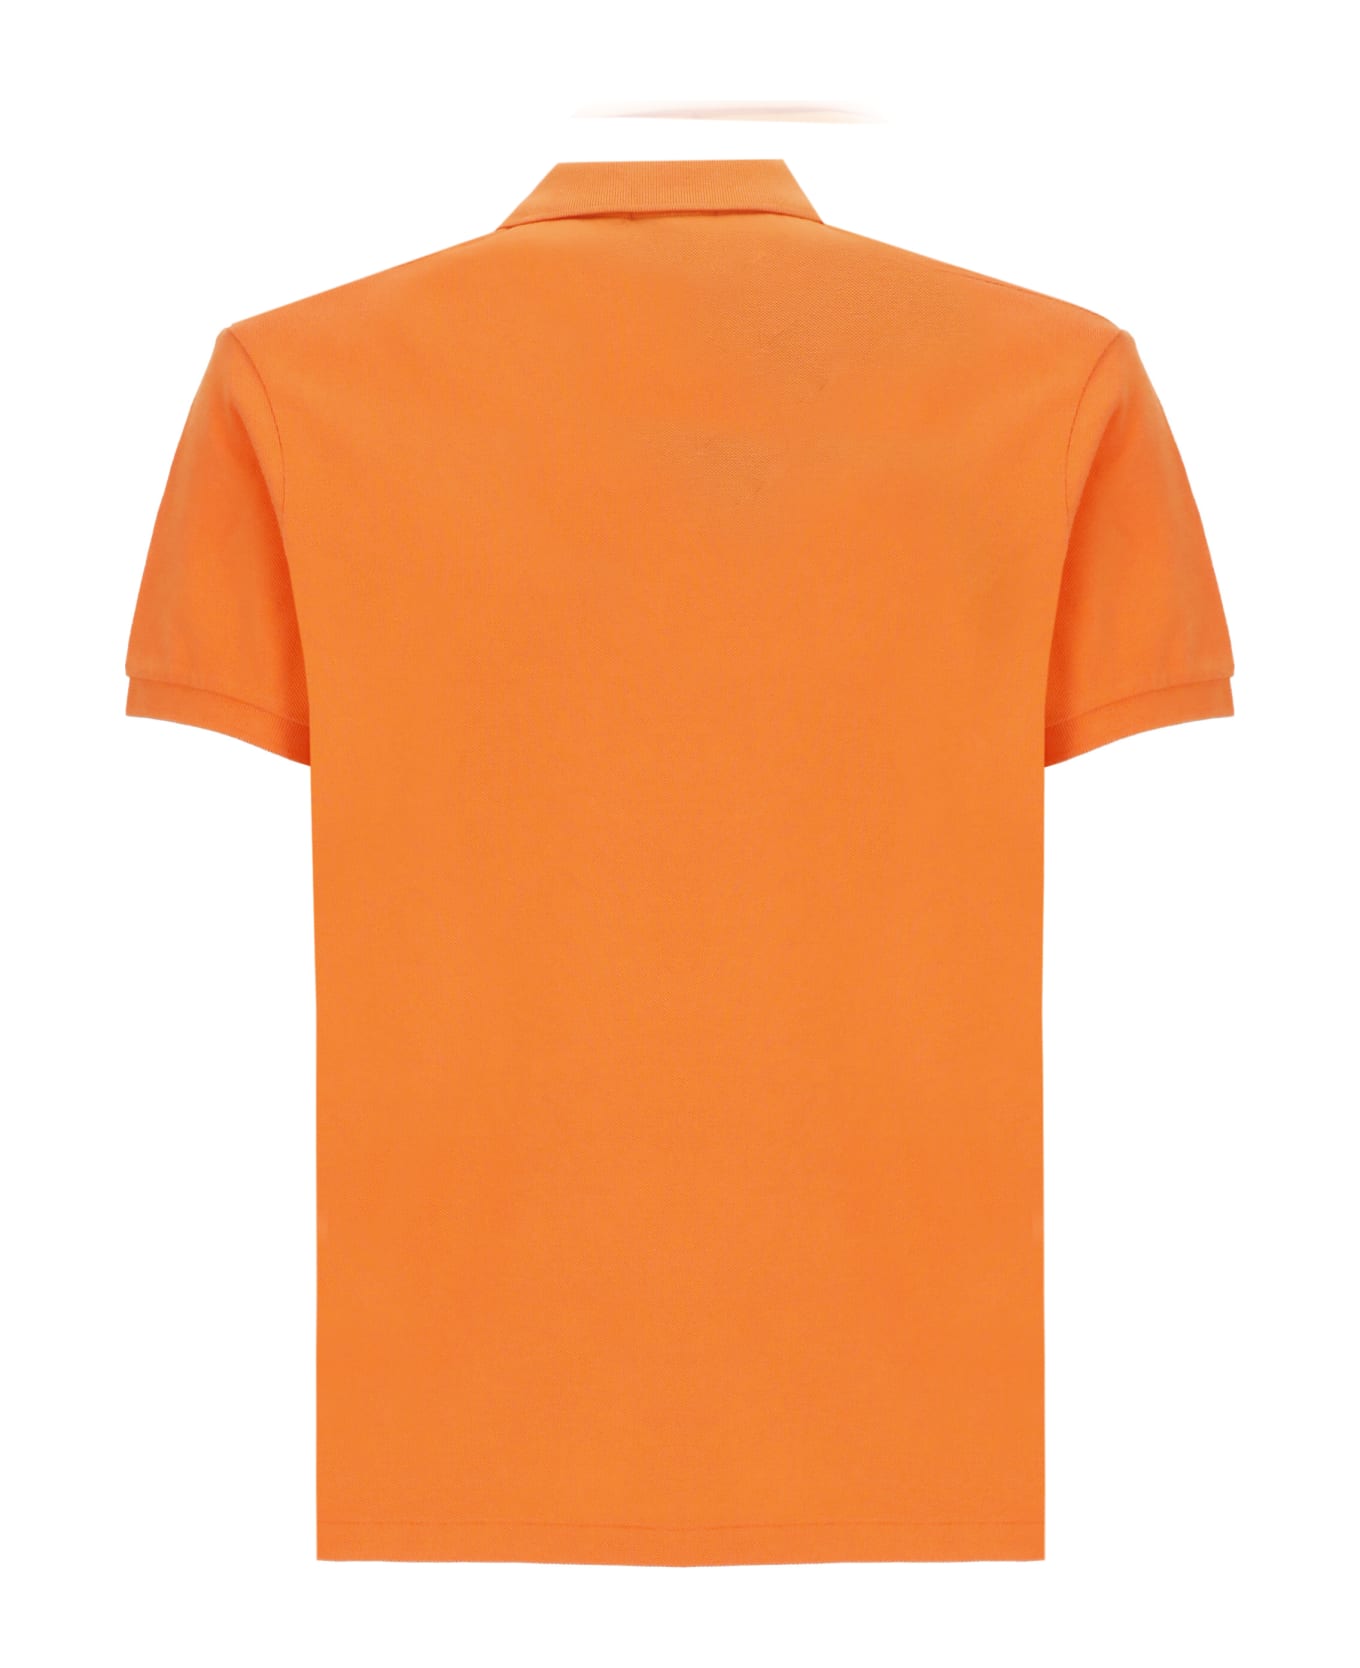 Ralph Lauren Polo Shirt With Pony - Orange